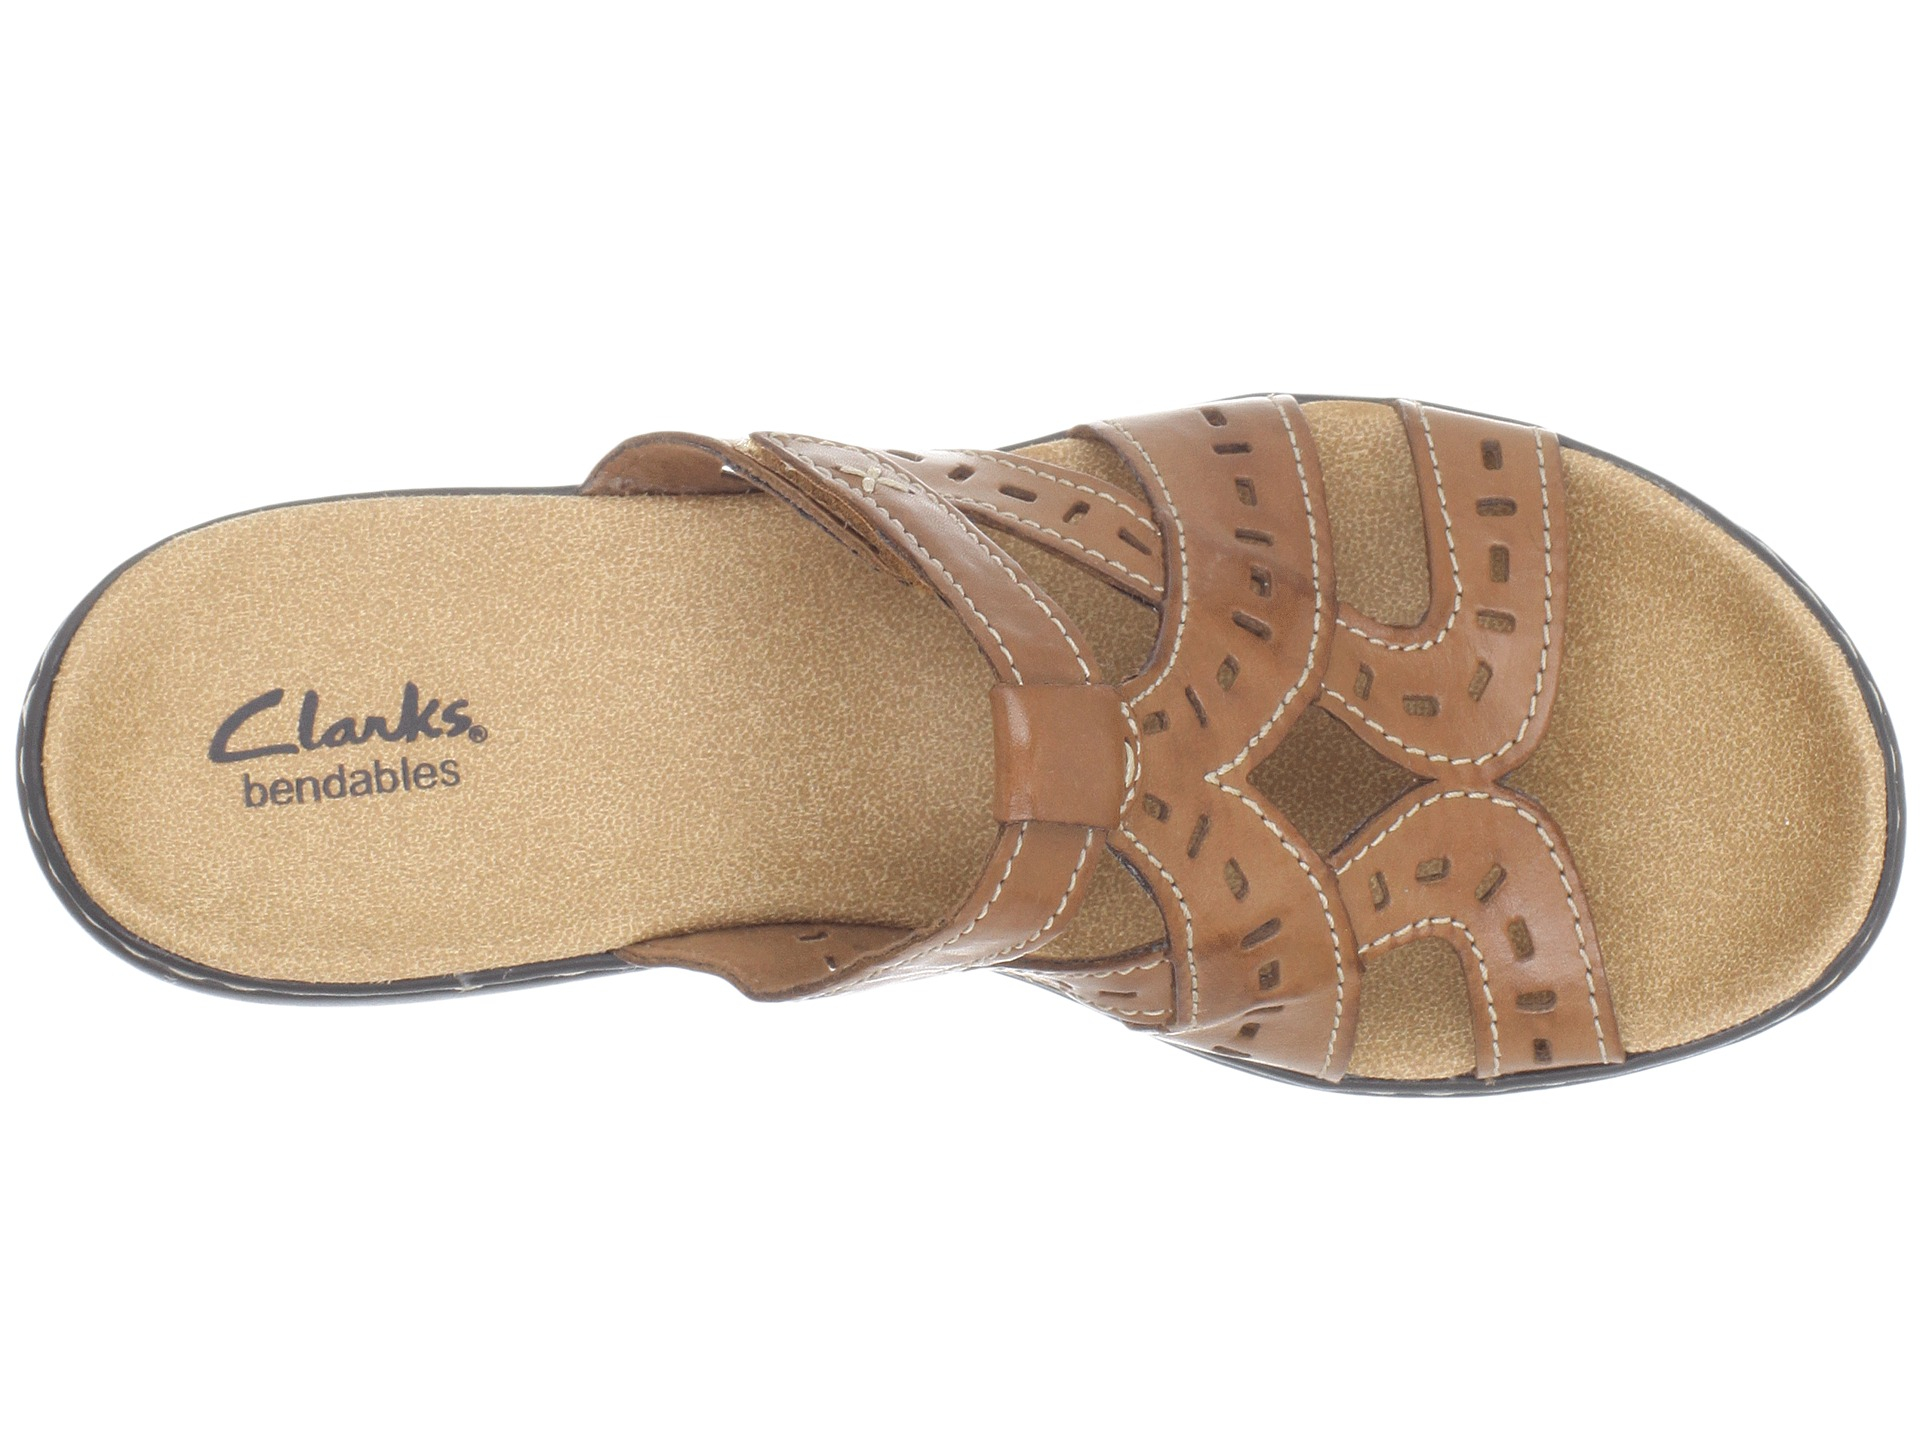 clarks sandals leisa truffle